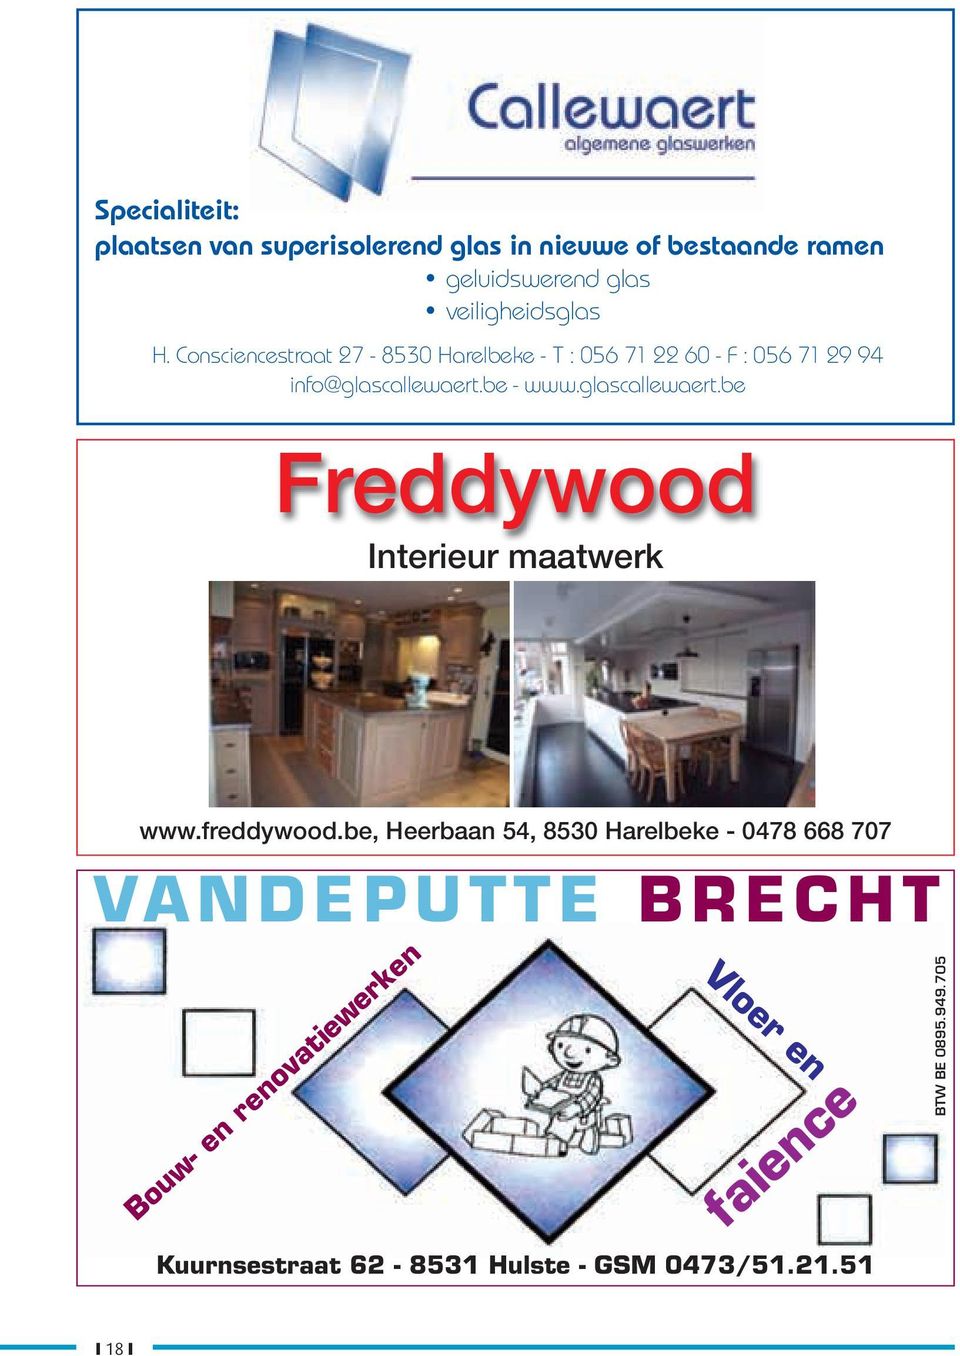 glascallewaert.be Freddywood Interieur maatwerk www.freddywood.